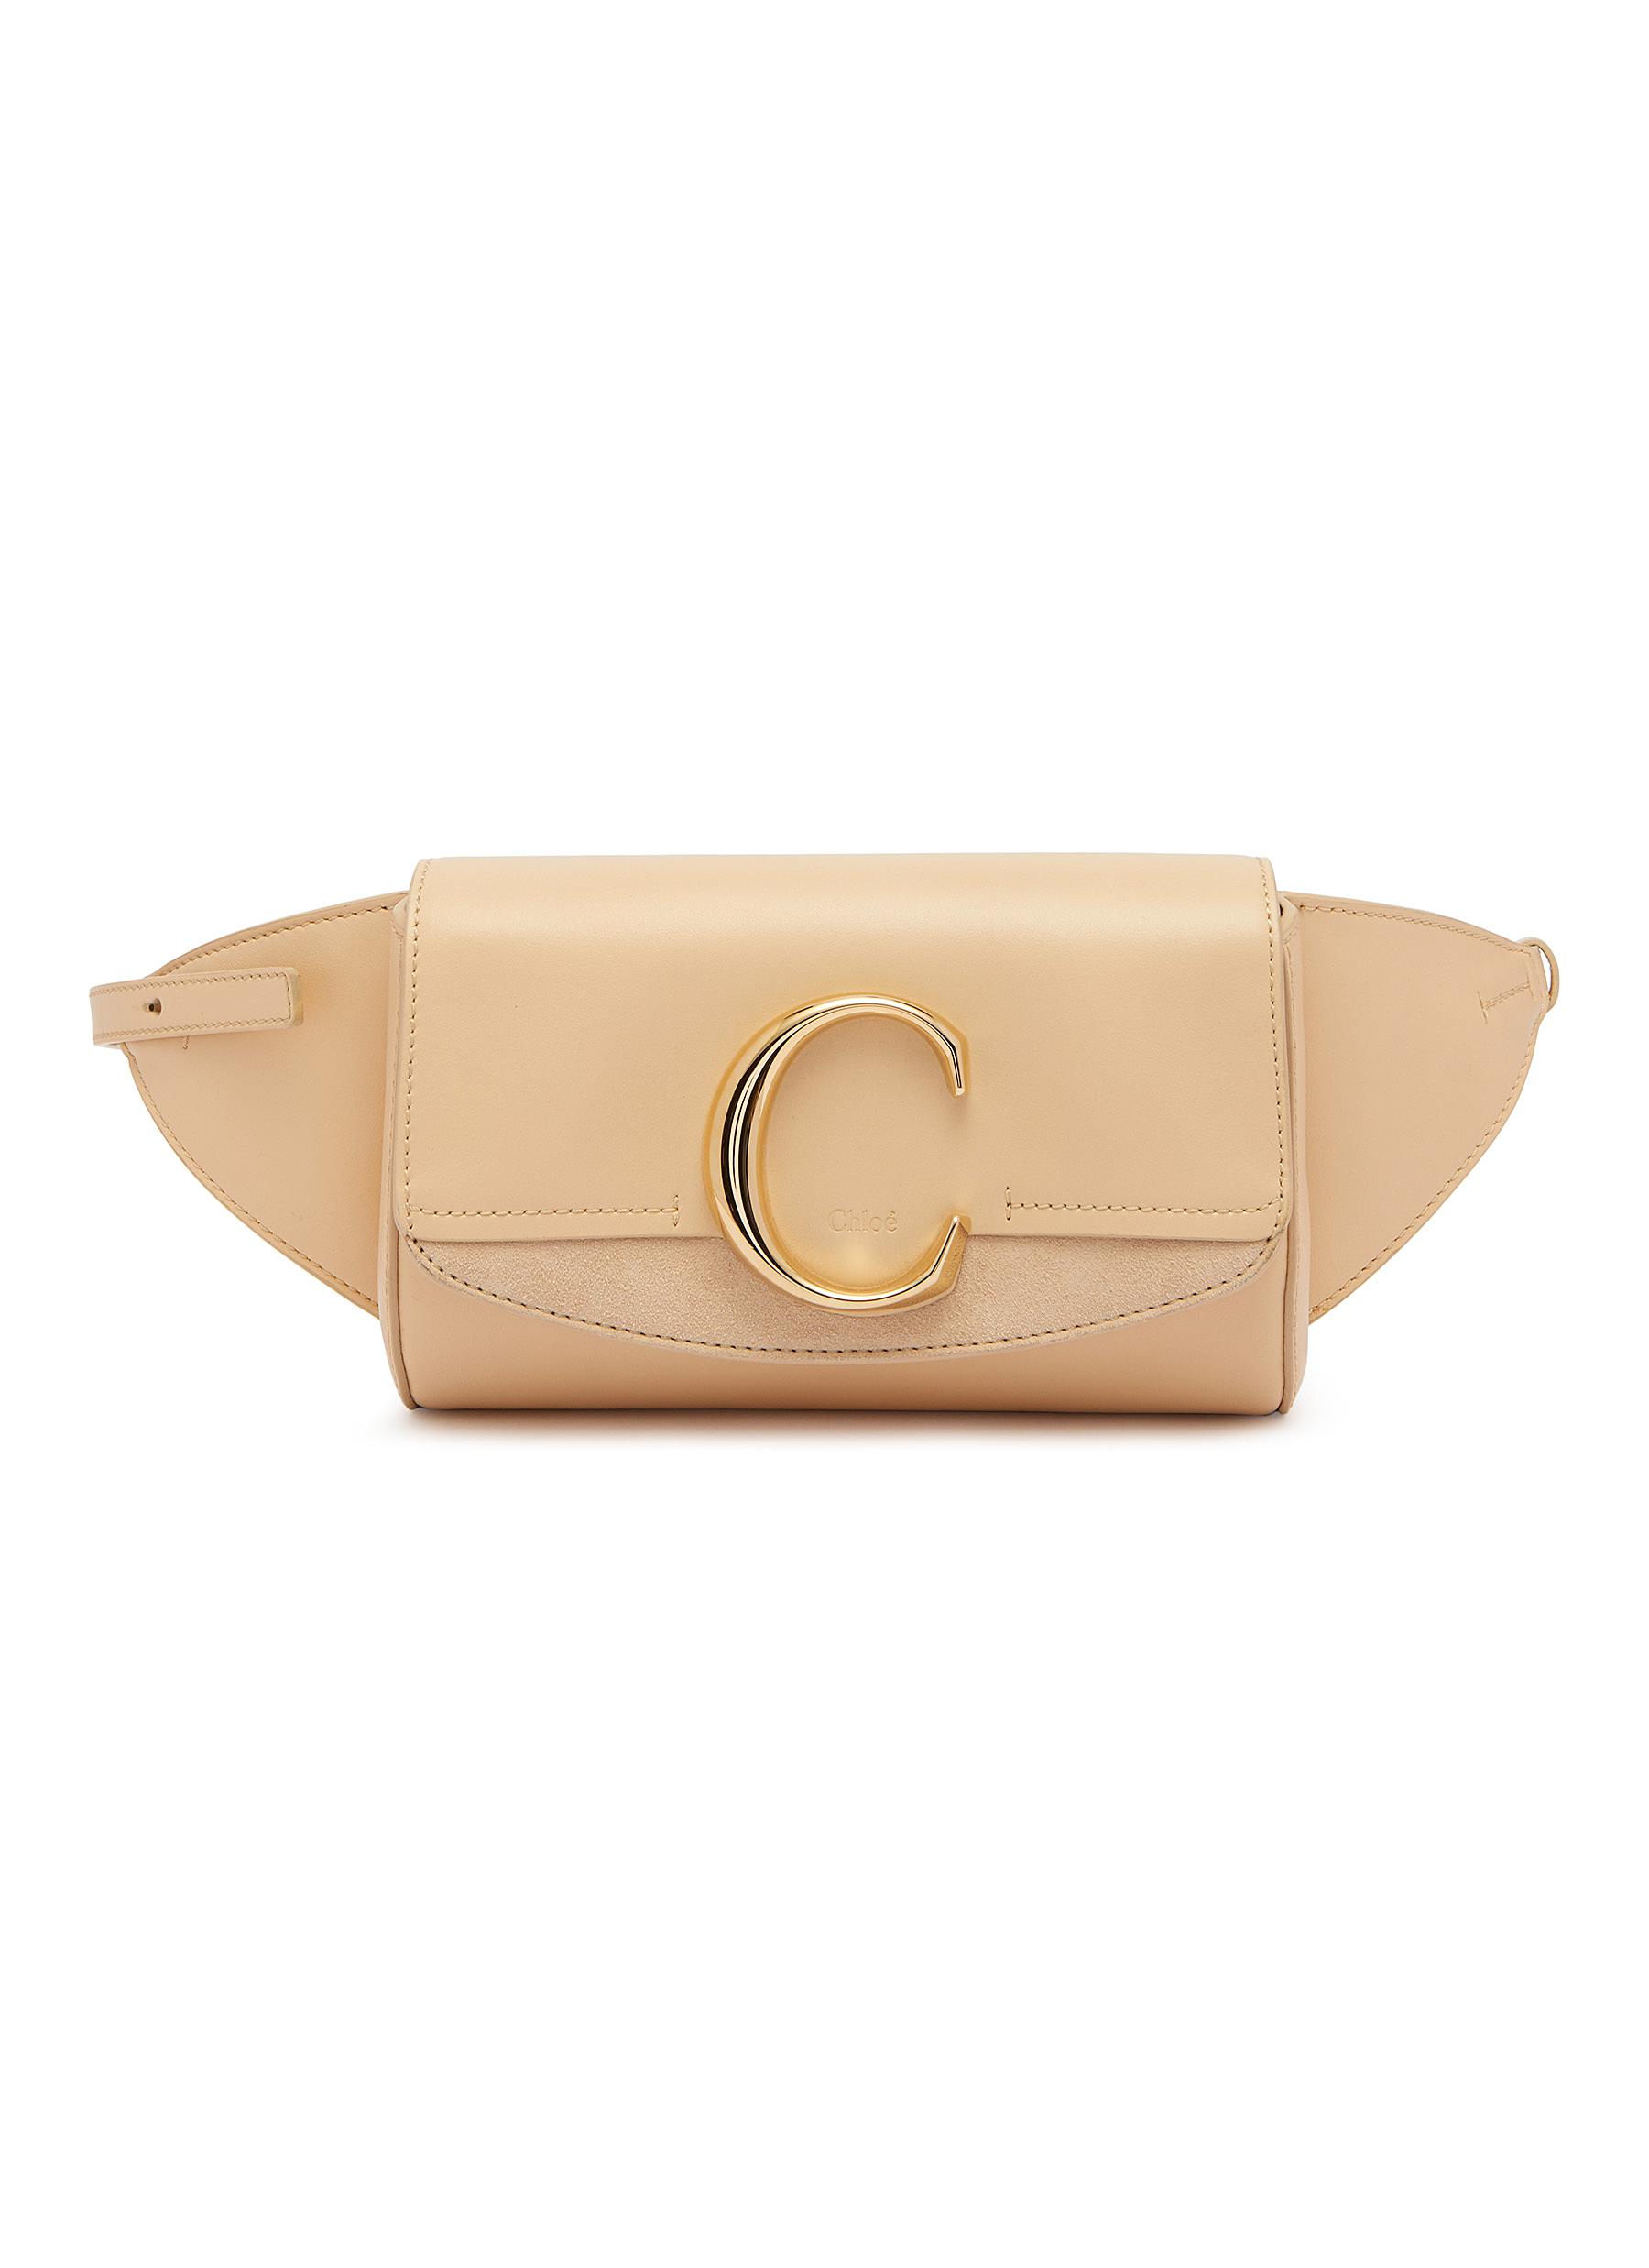 Chloé ' C' Suede Panel Leather Bum Bag In Blondie Beige | ModeSens